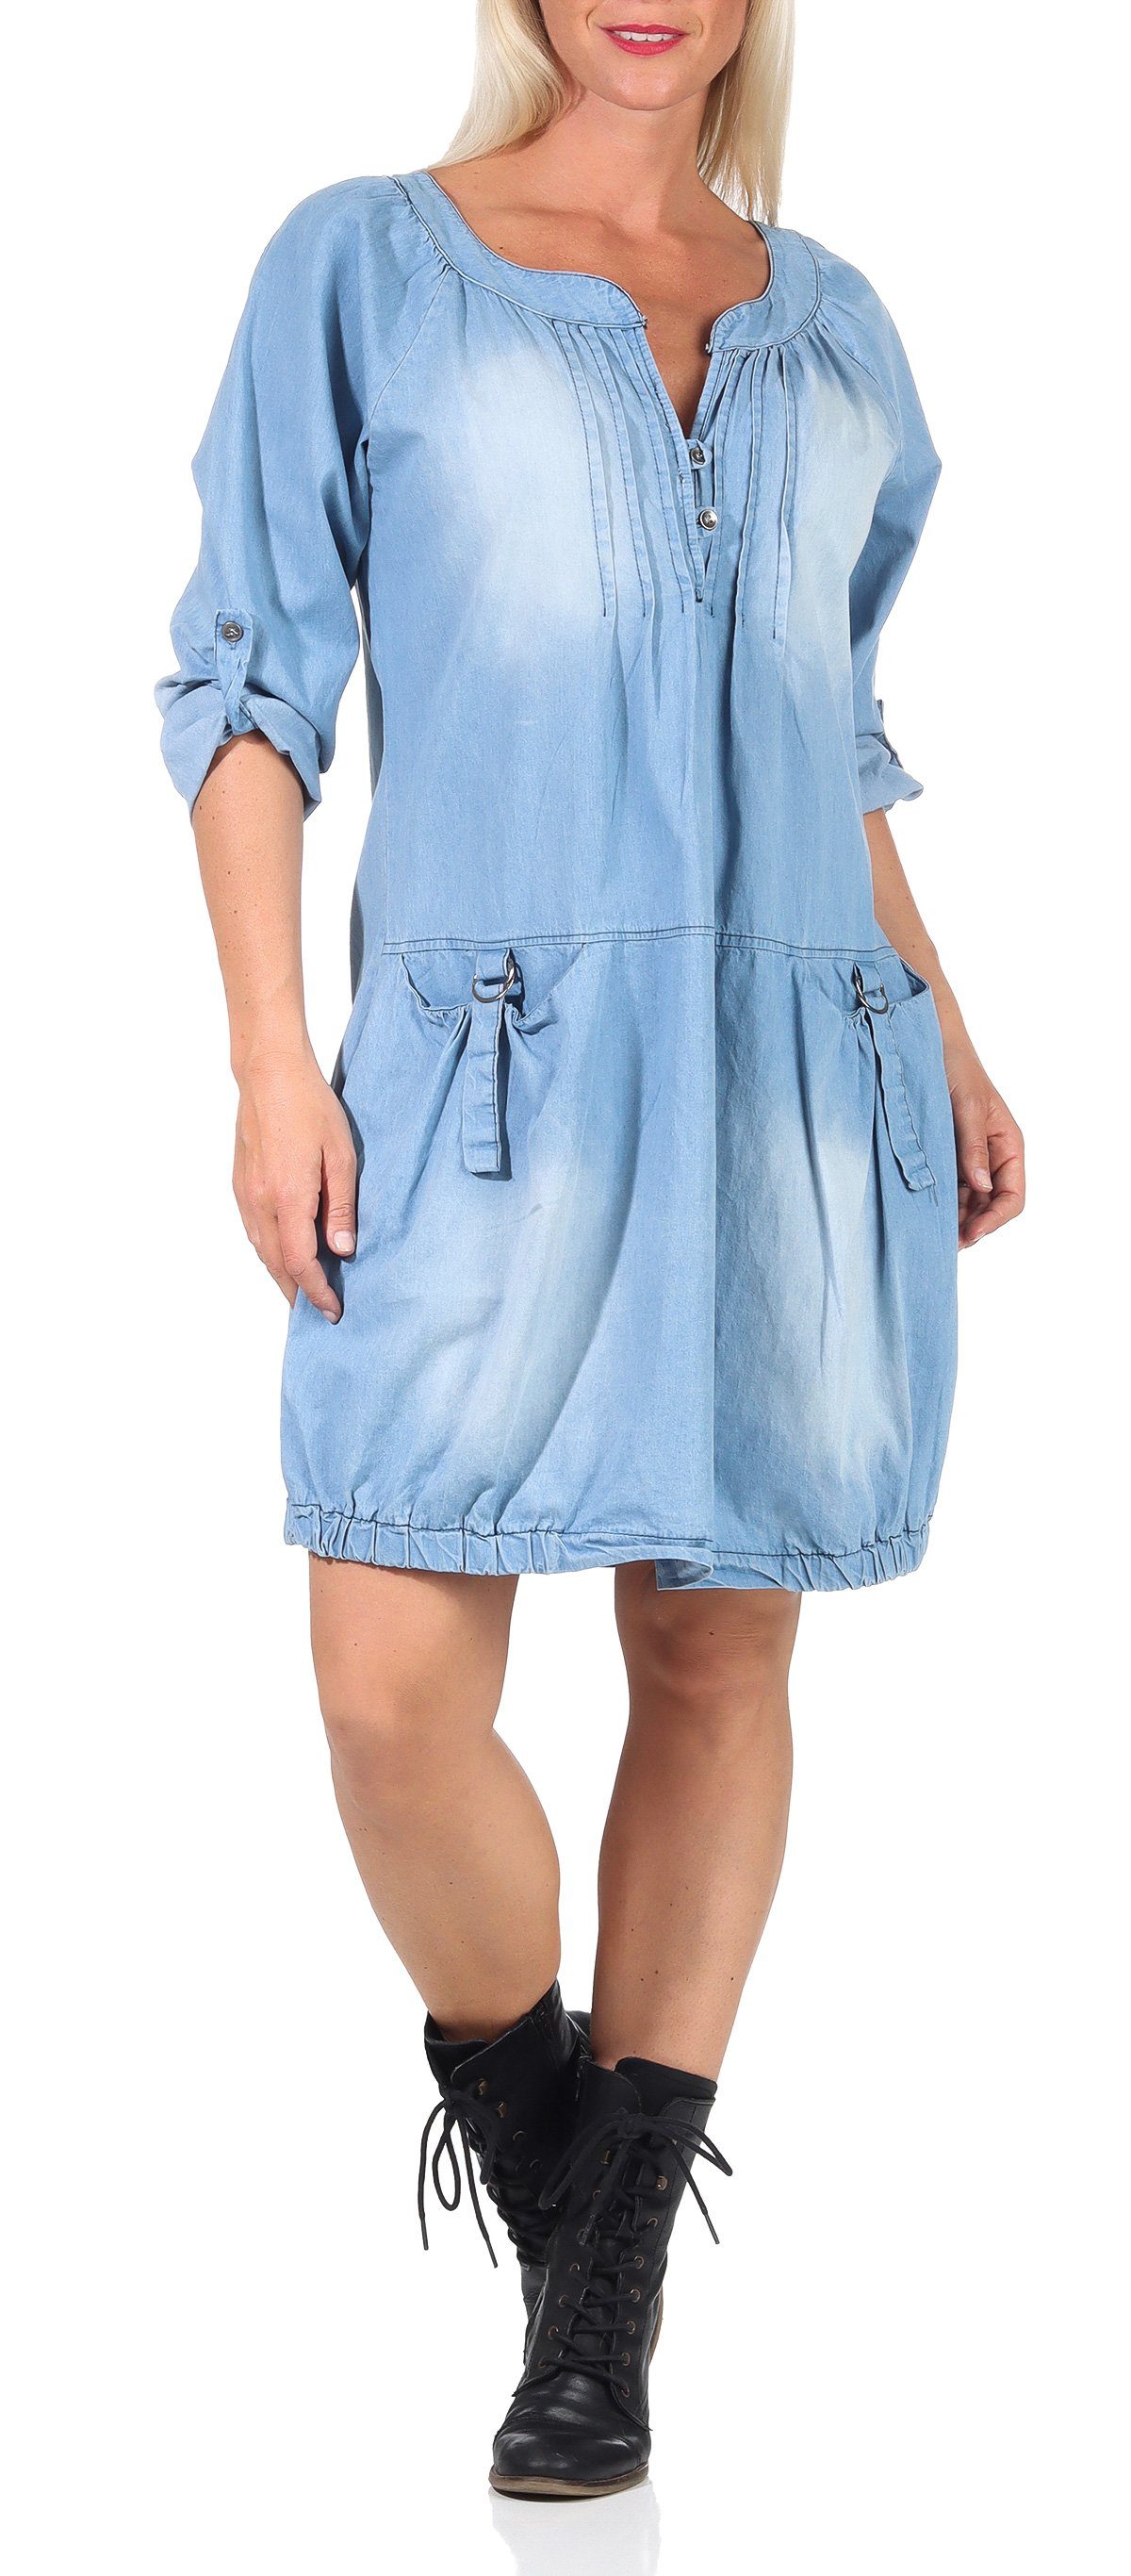 Einheitsgröße malito hellblau Sommerkleid than more 6255 fashion Strandkleid Jeanskleid